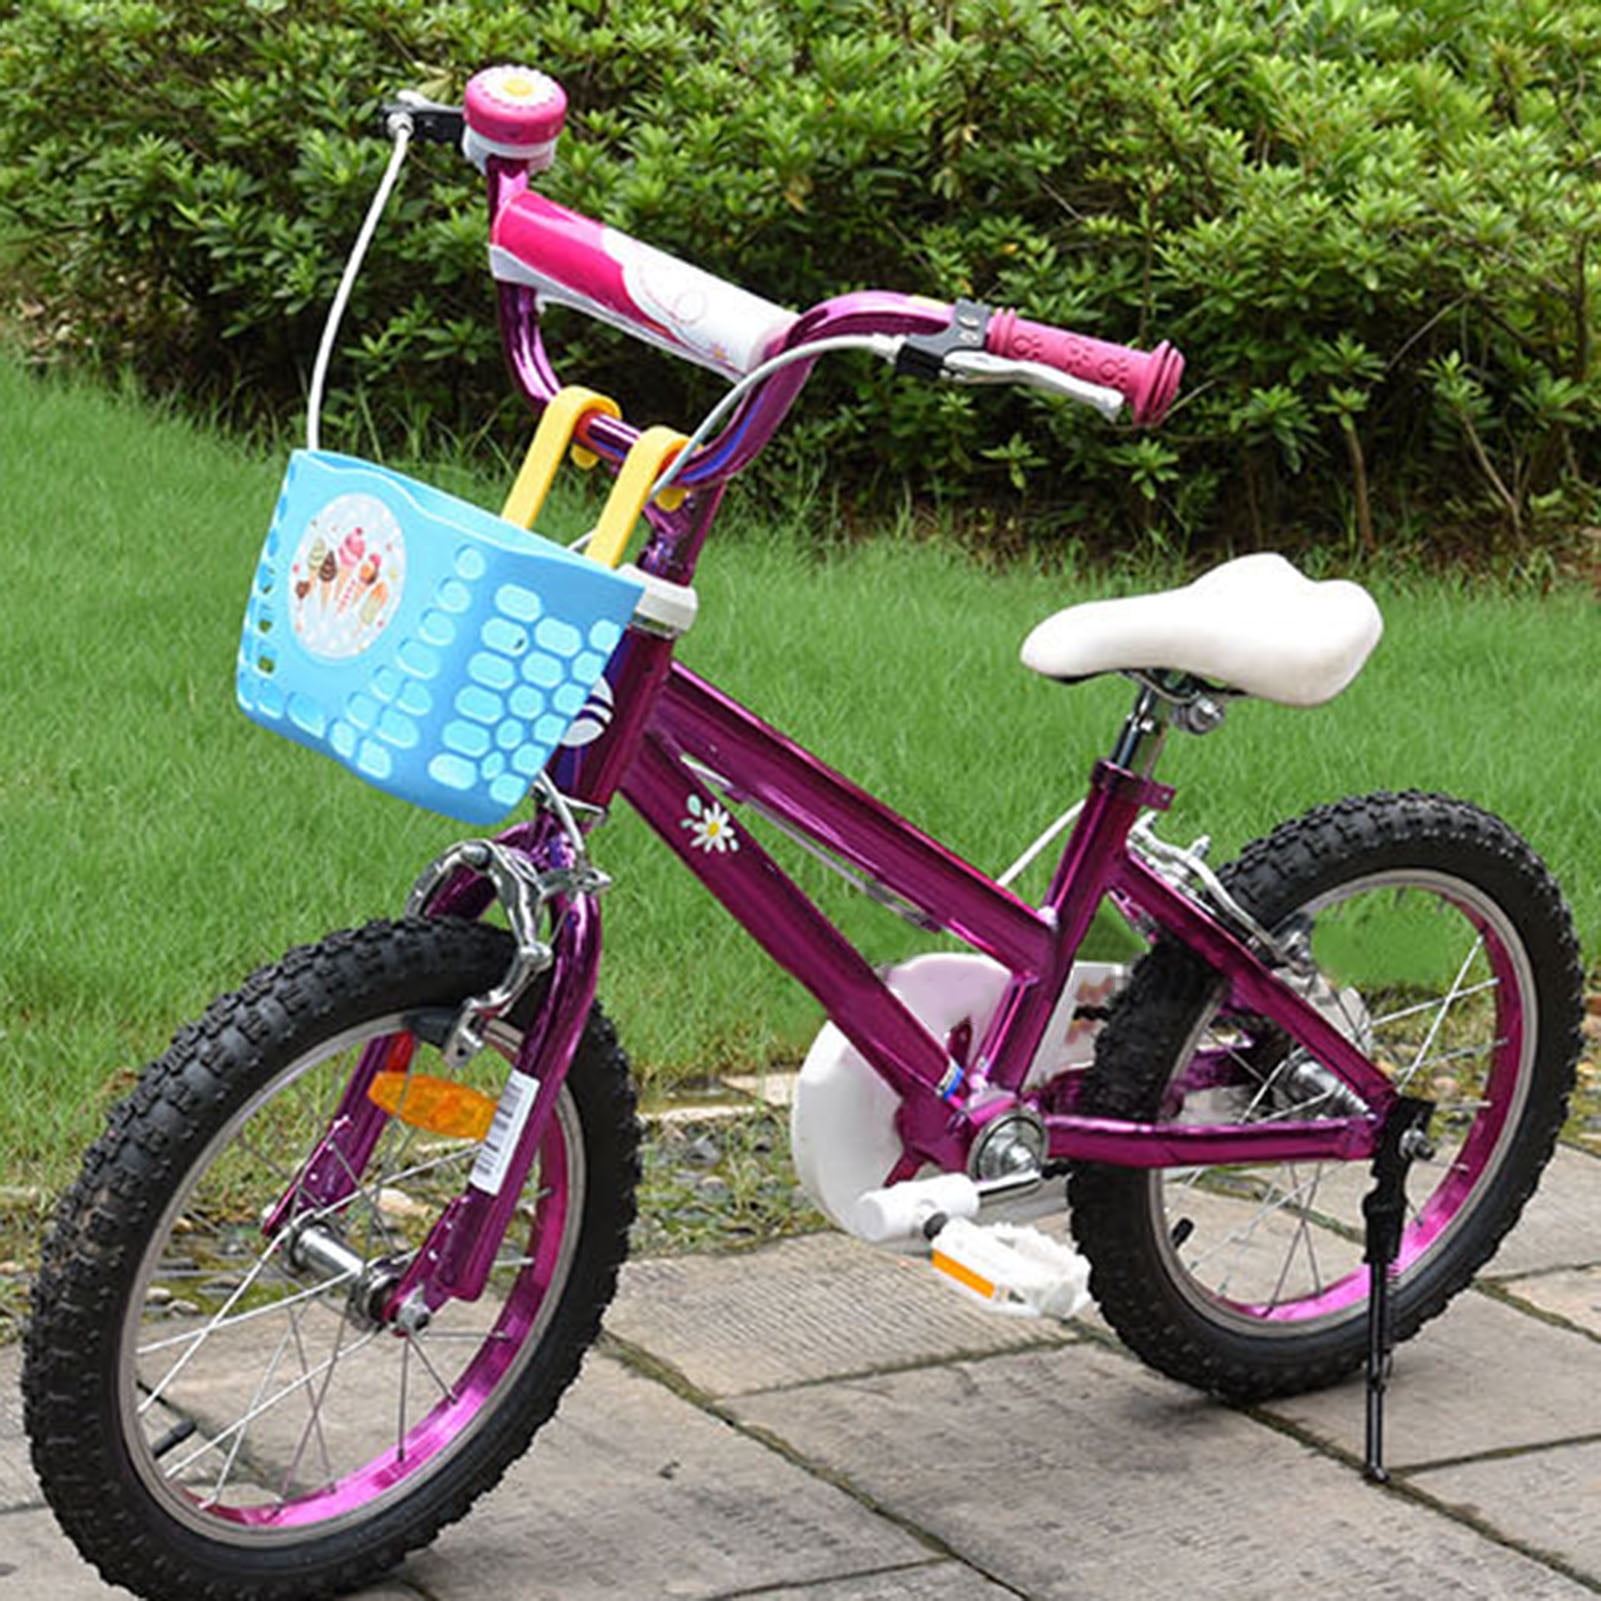 Bike Basket For Girls Boys Kids,Multiple Colors Bike Basket With Hook And Buckle Front Handlebar Kids Bicycle Basket For Most Kids Bikes